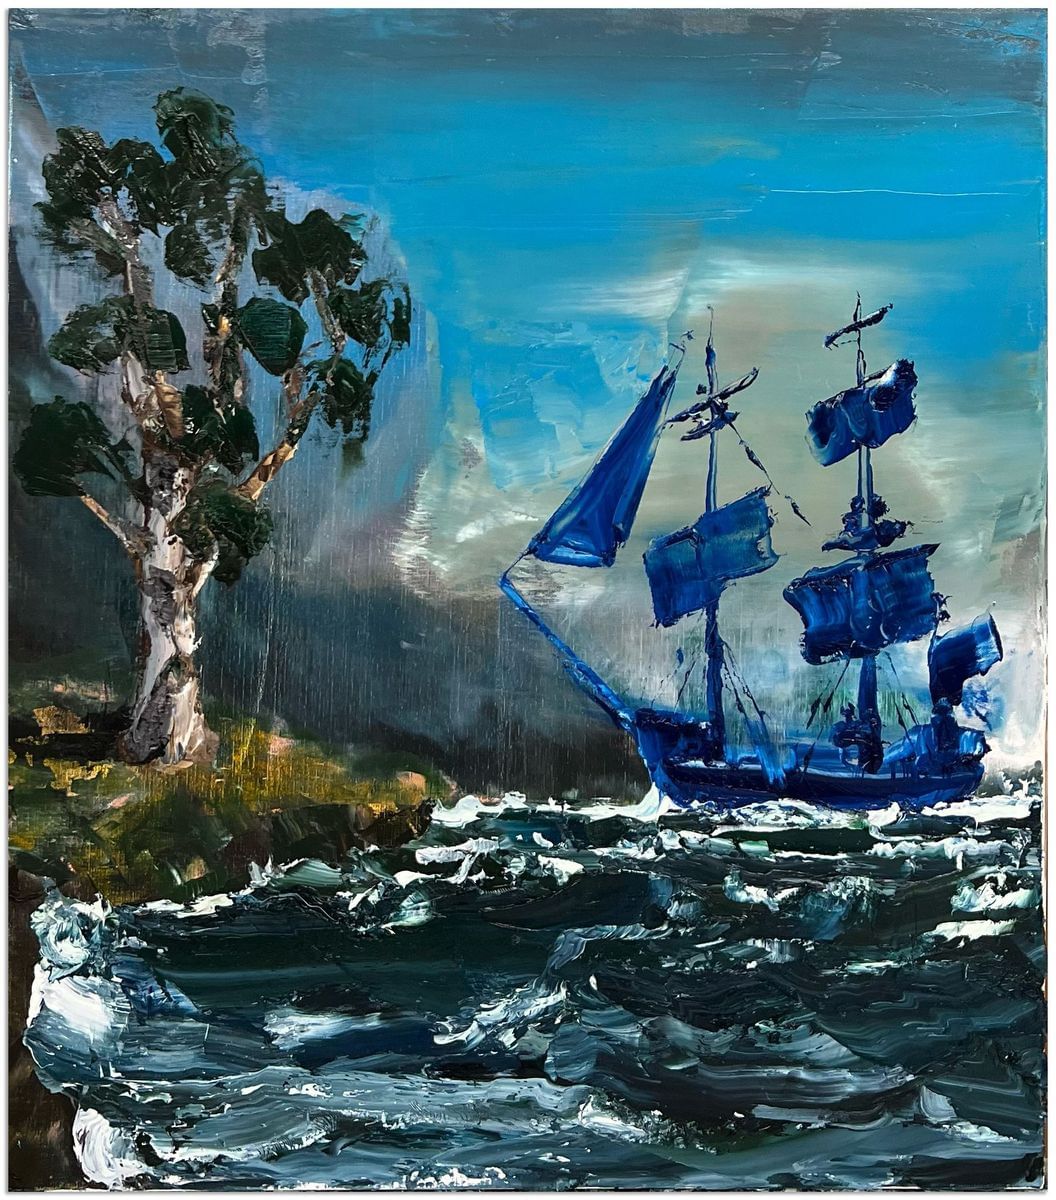 Paul Ryan - Blue Ship, Windy Shore